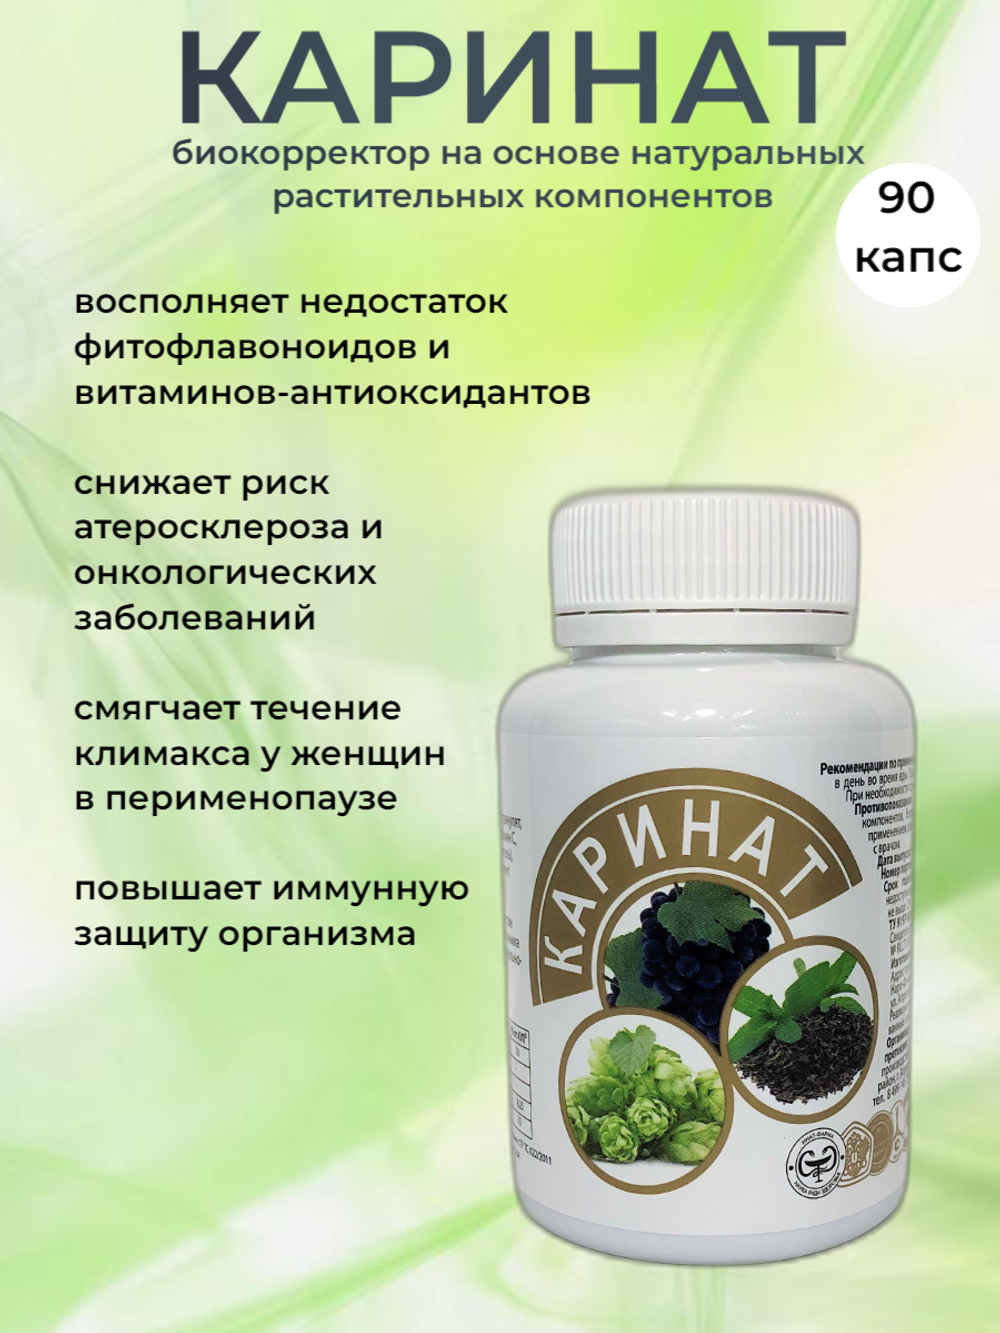 Каринат - биокорректор, 90 капсул по 0,47 мг.